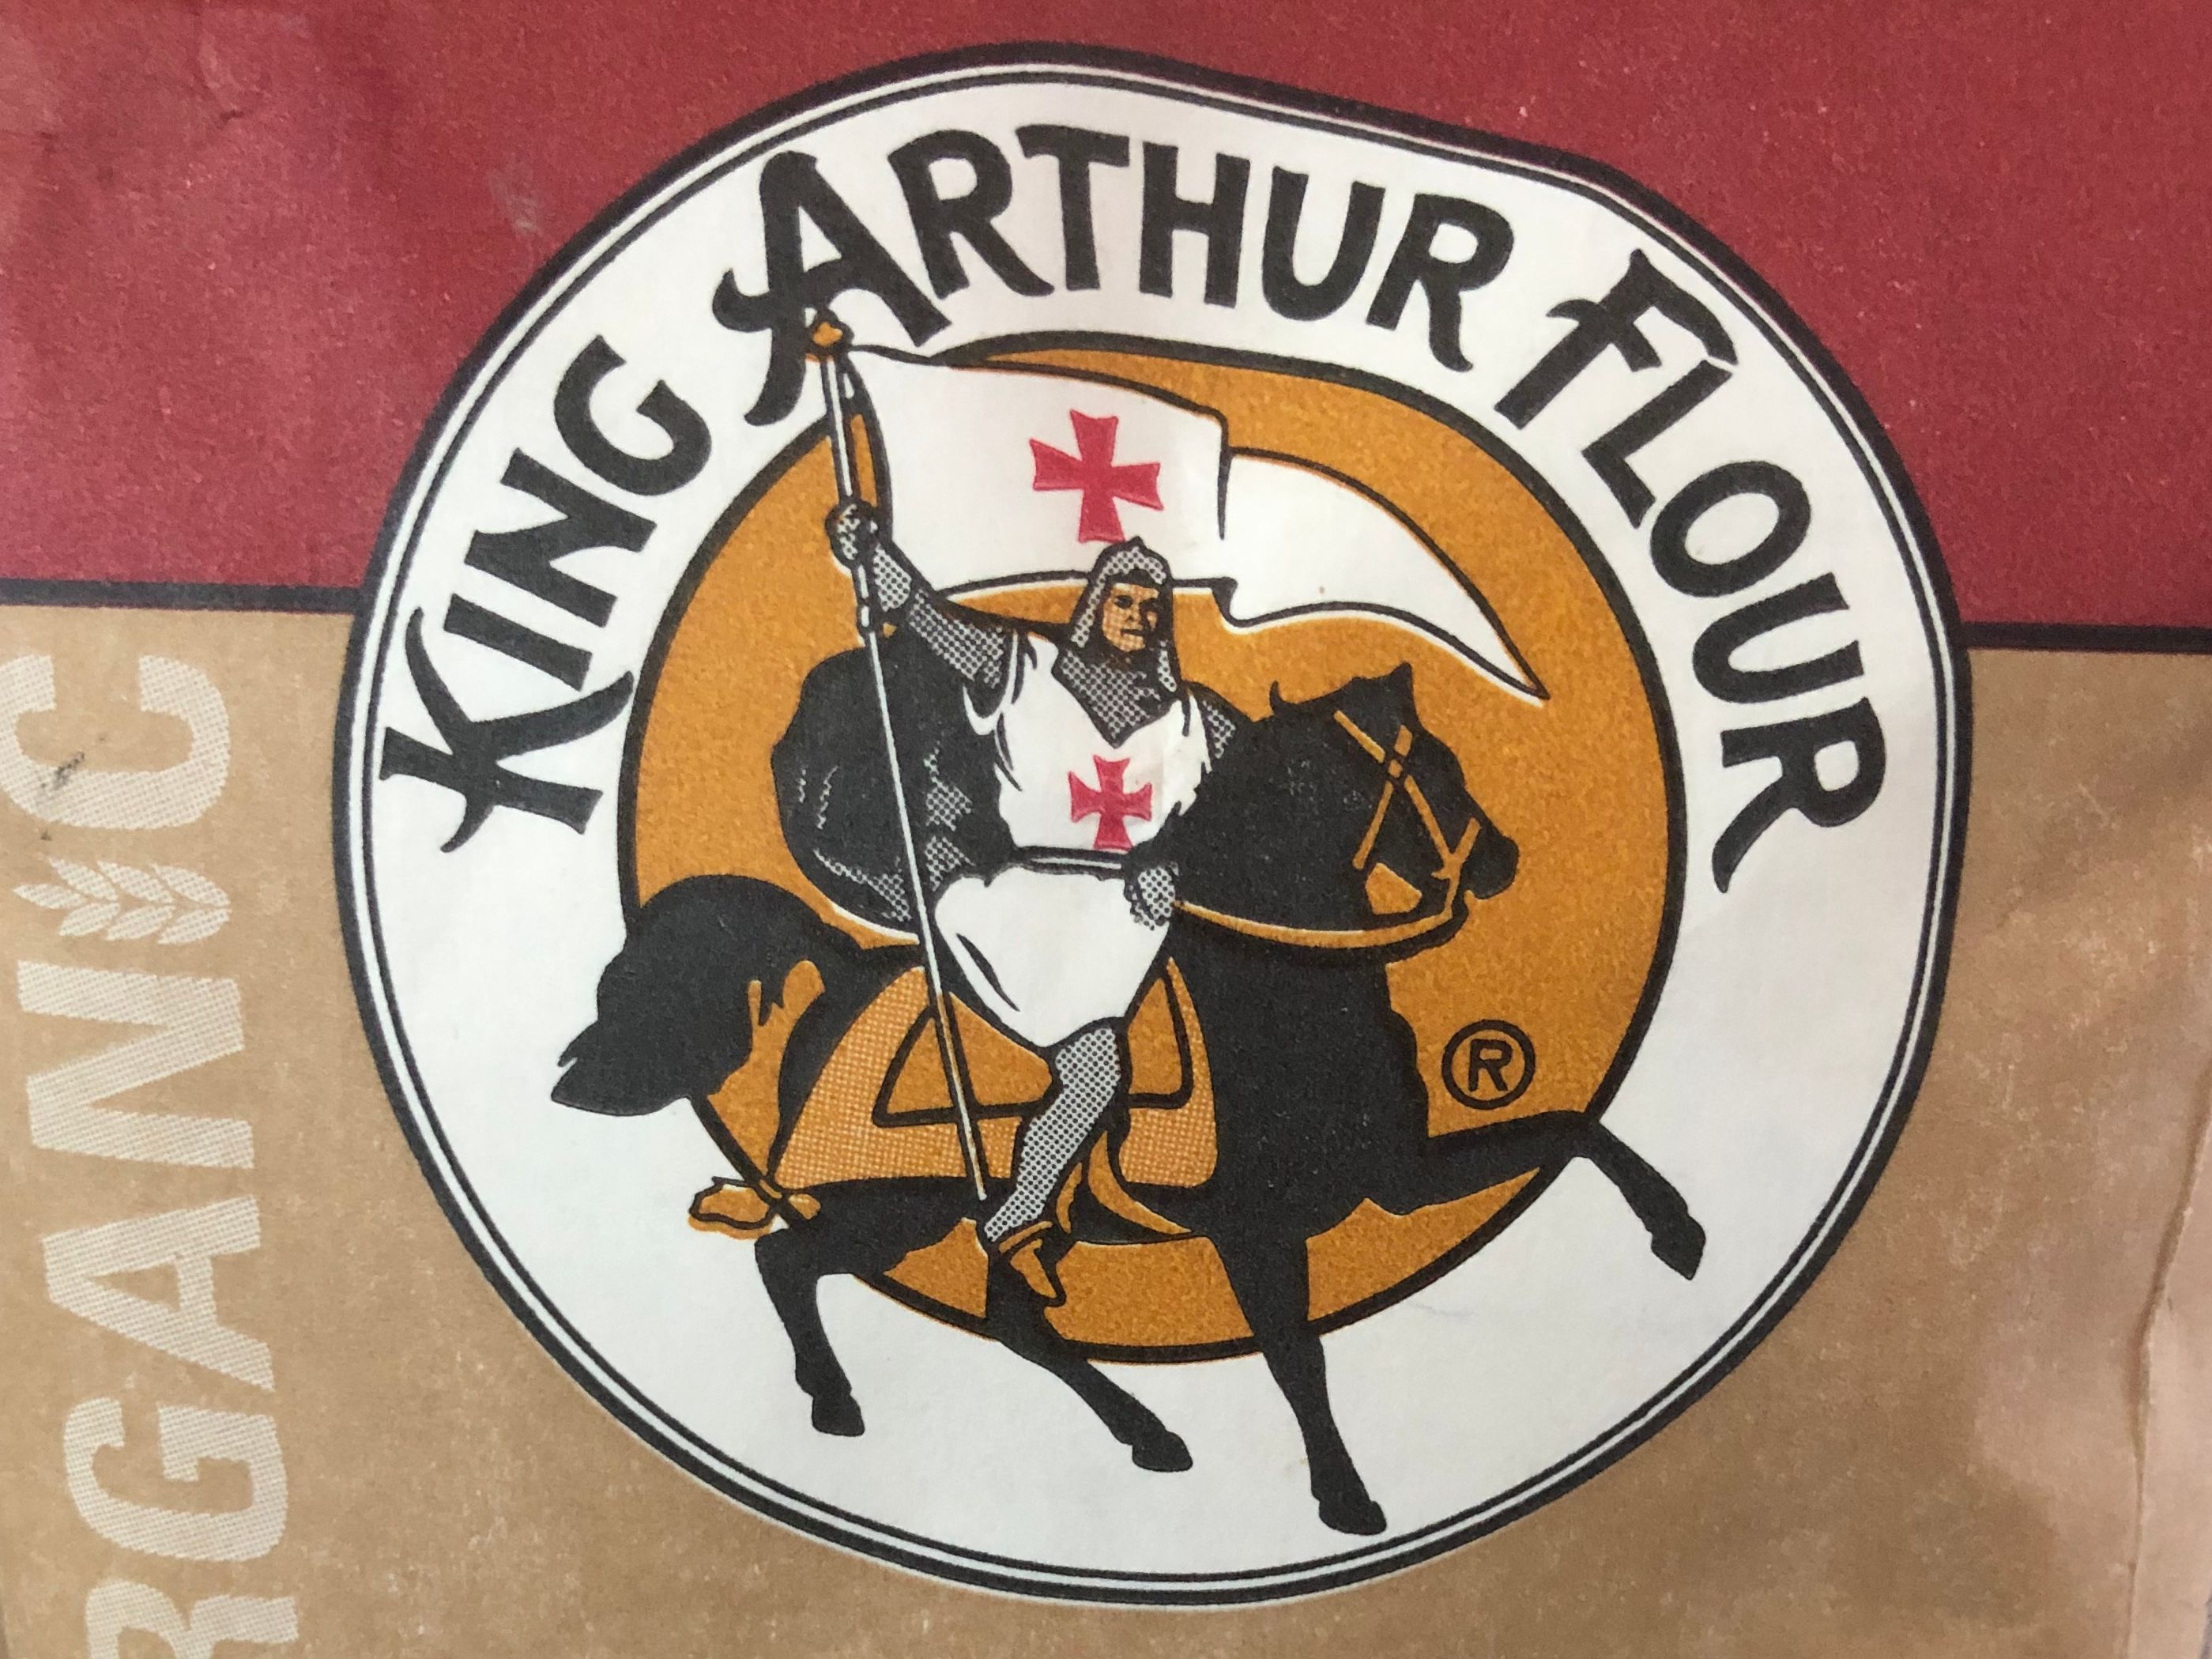 King Arthur Baking - Wikipedia